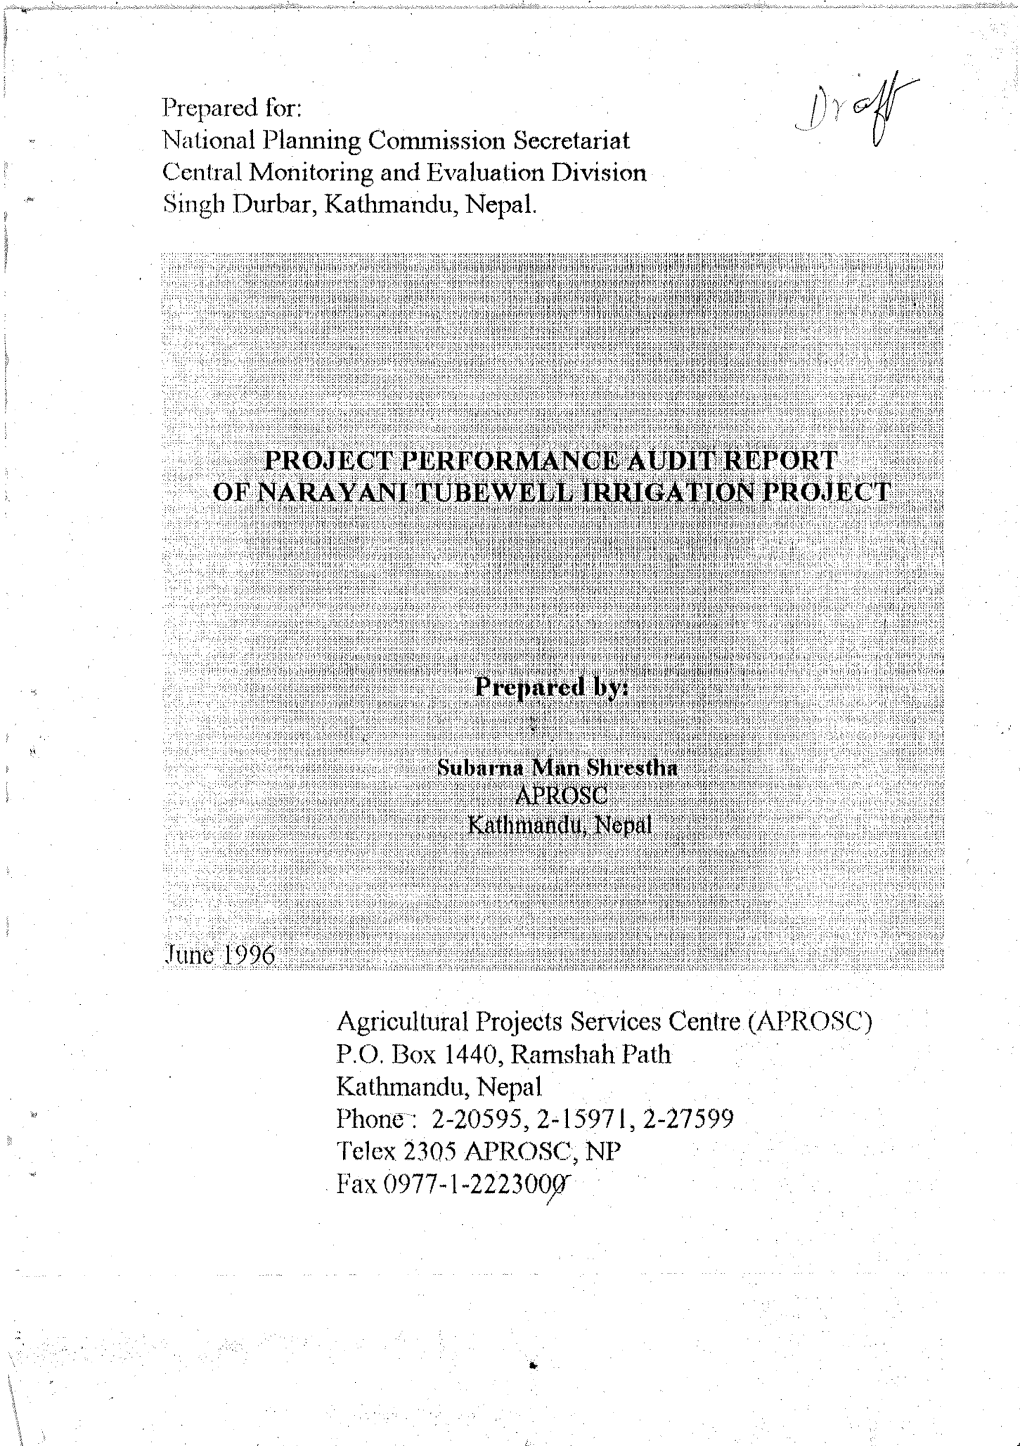 Project Performance Audit Report of Narayani Tubewell Irrigation Project